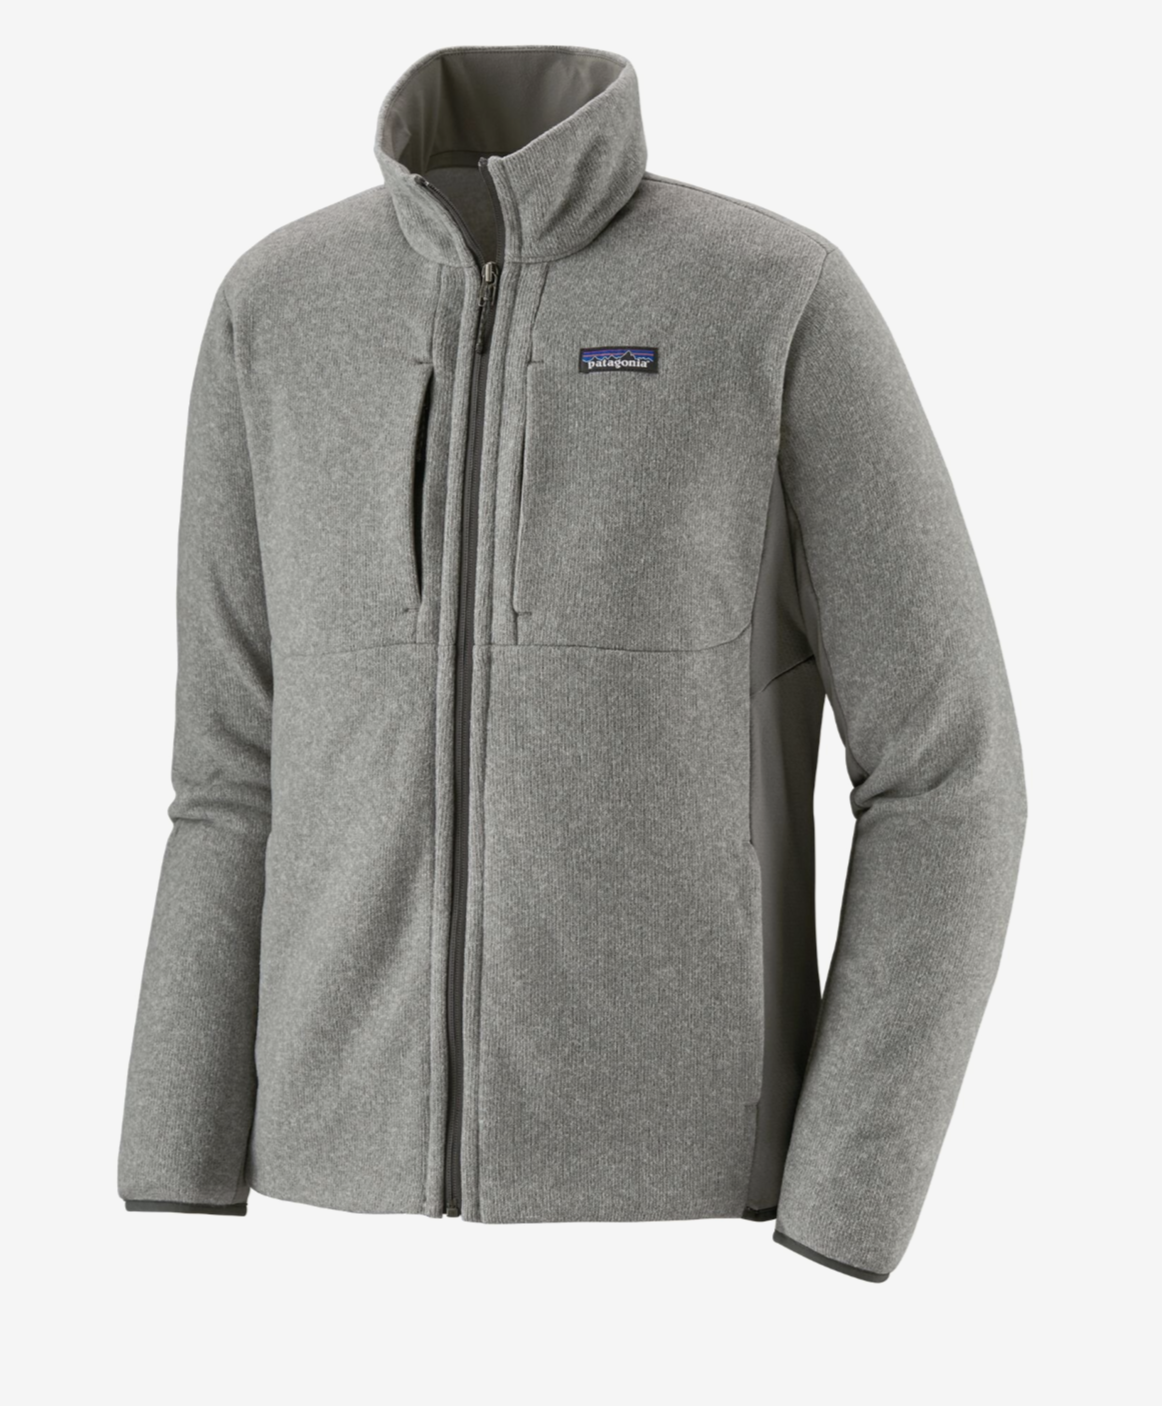 Patagonia Men's Lightweight Better Sweater Jacket